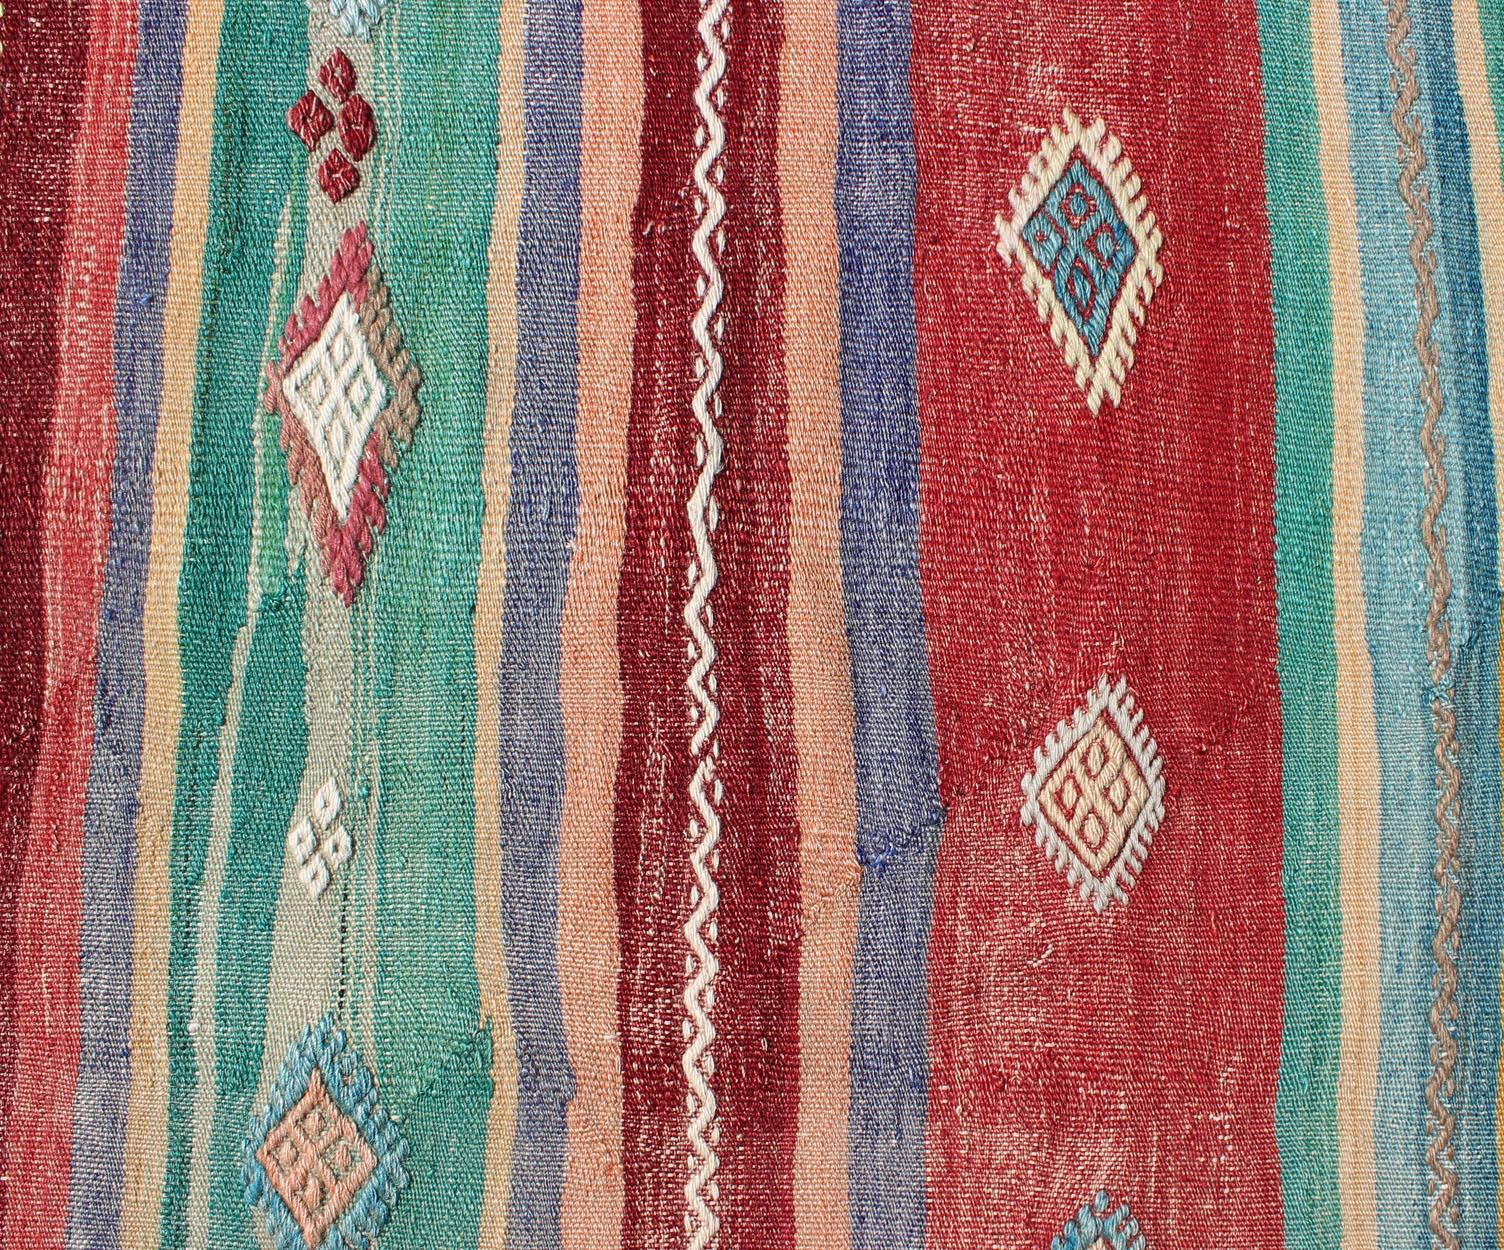 Colorful Vintage Turkish Flat-Weave Kilim Rug with Striped Geometric Design 1